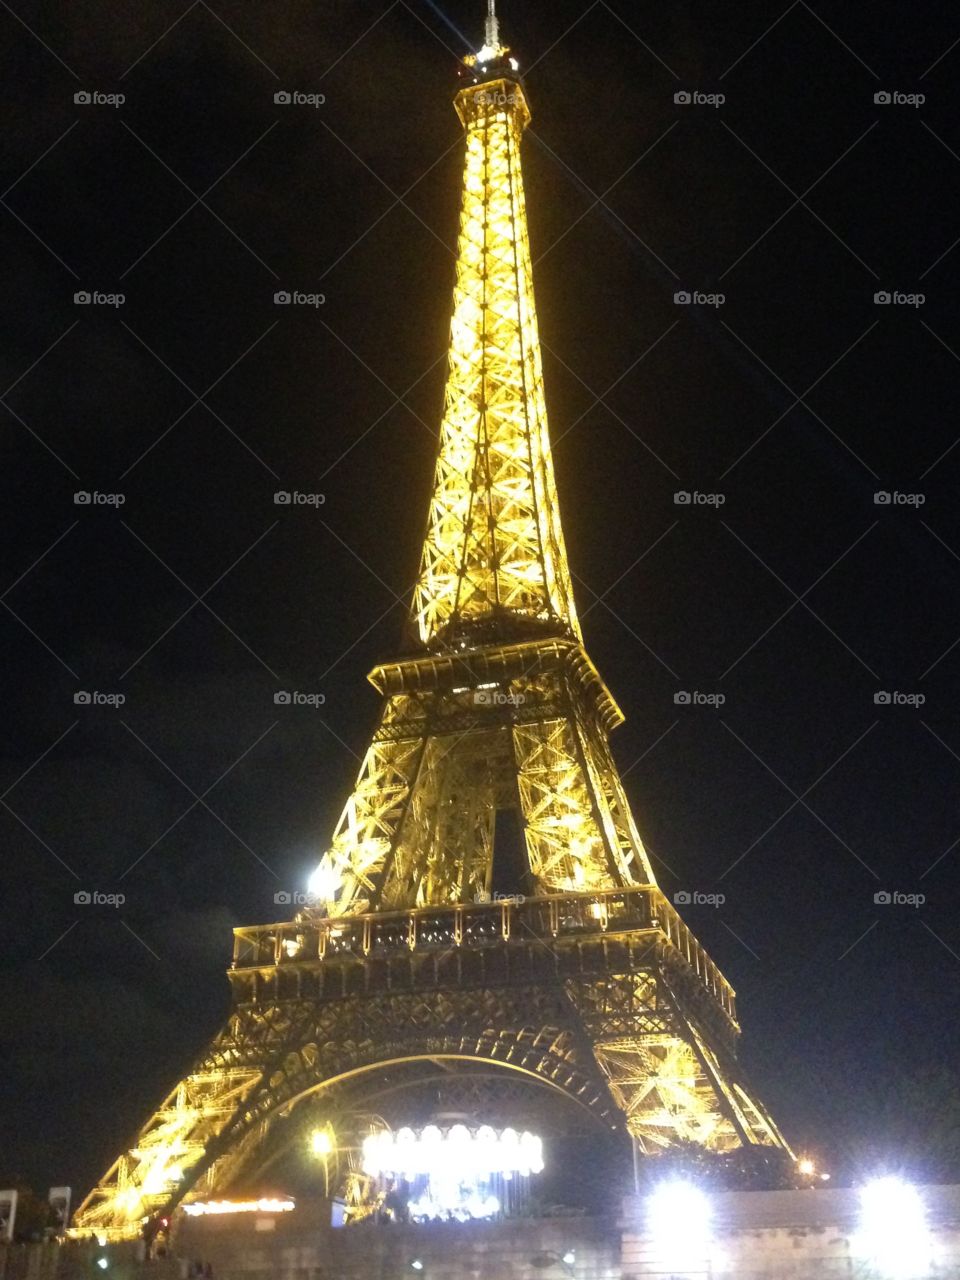 Eiffel Tower at night